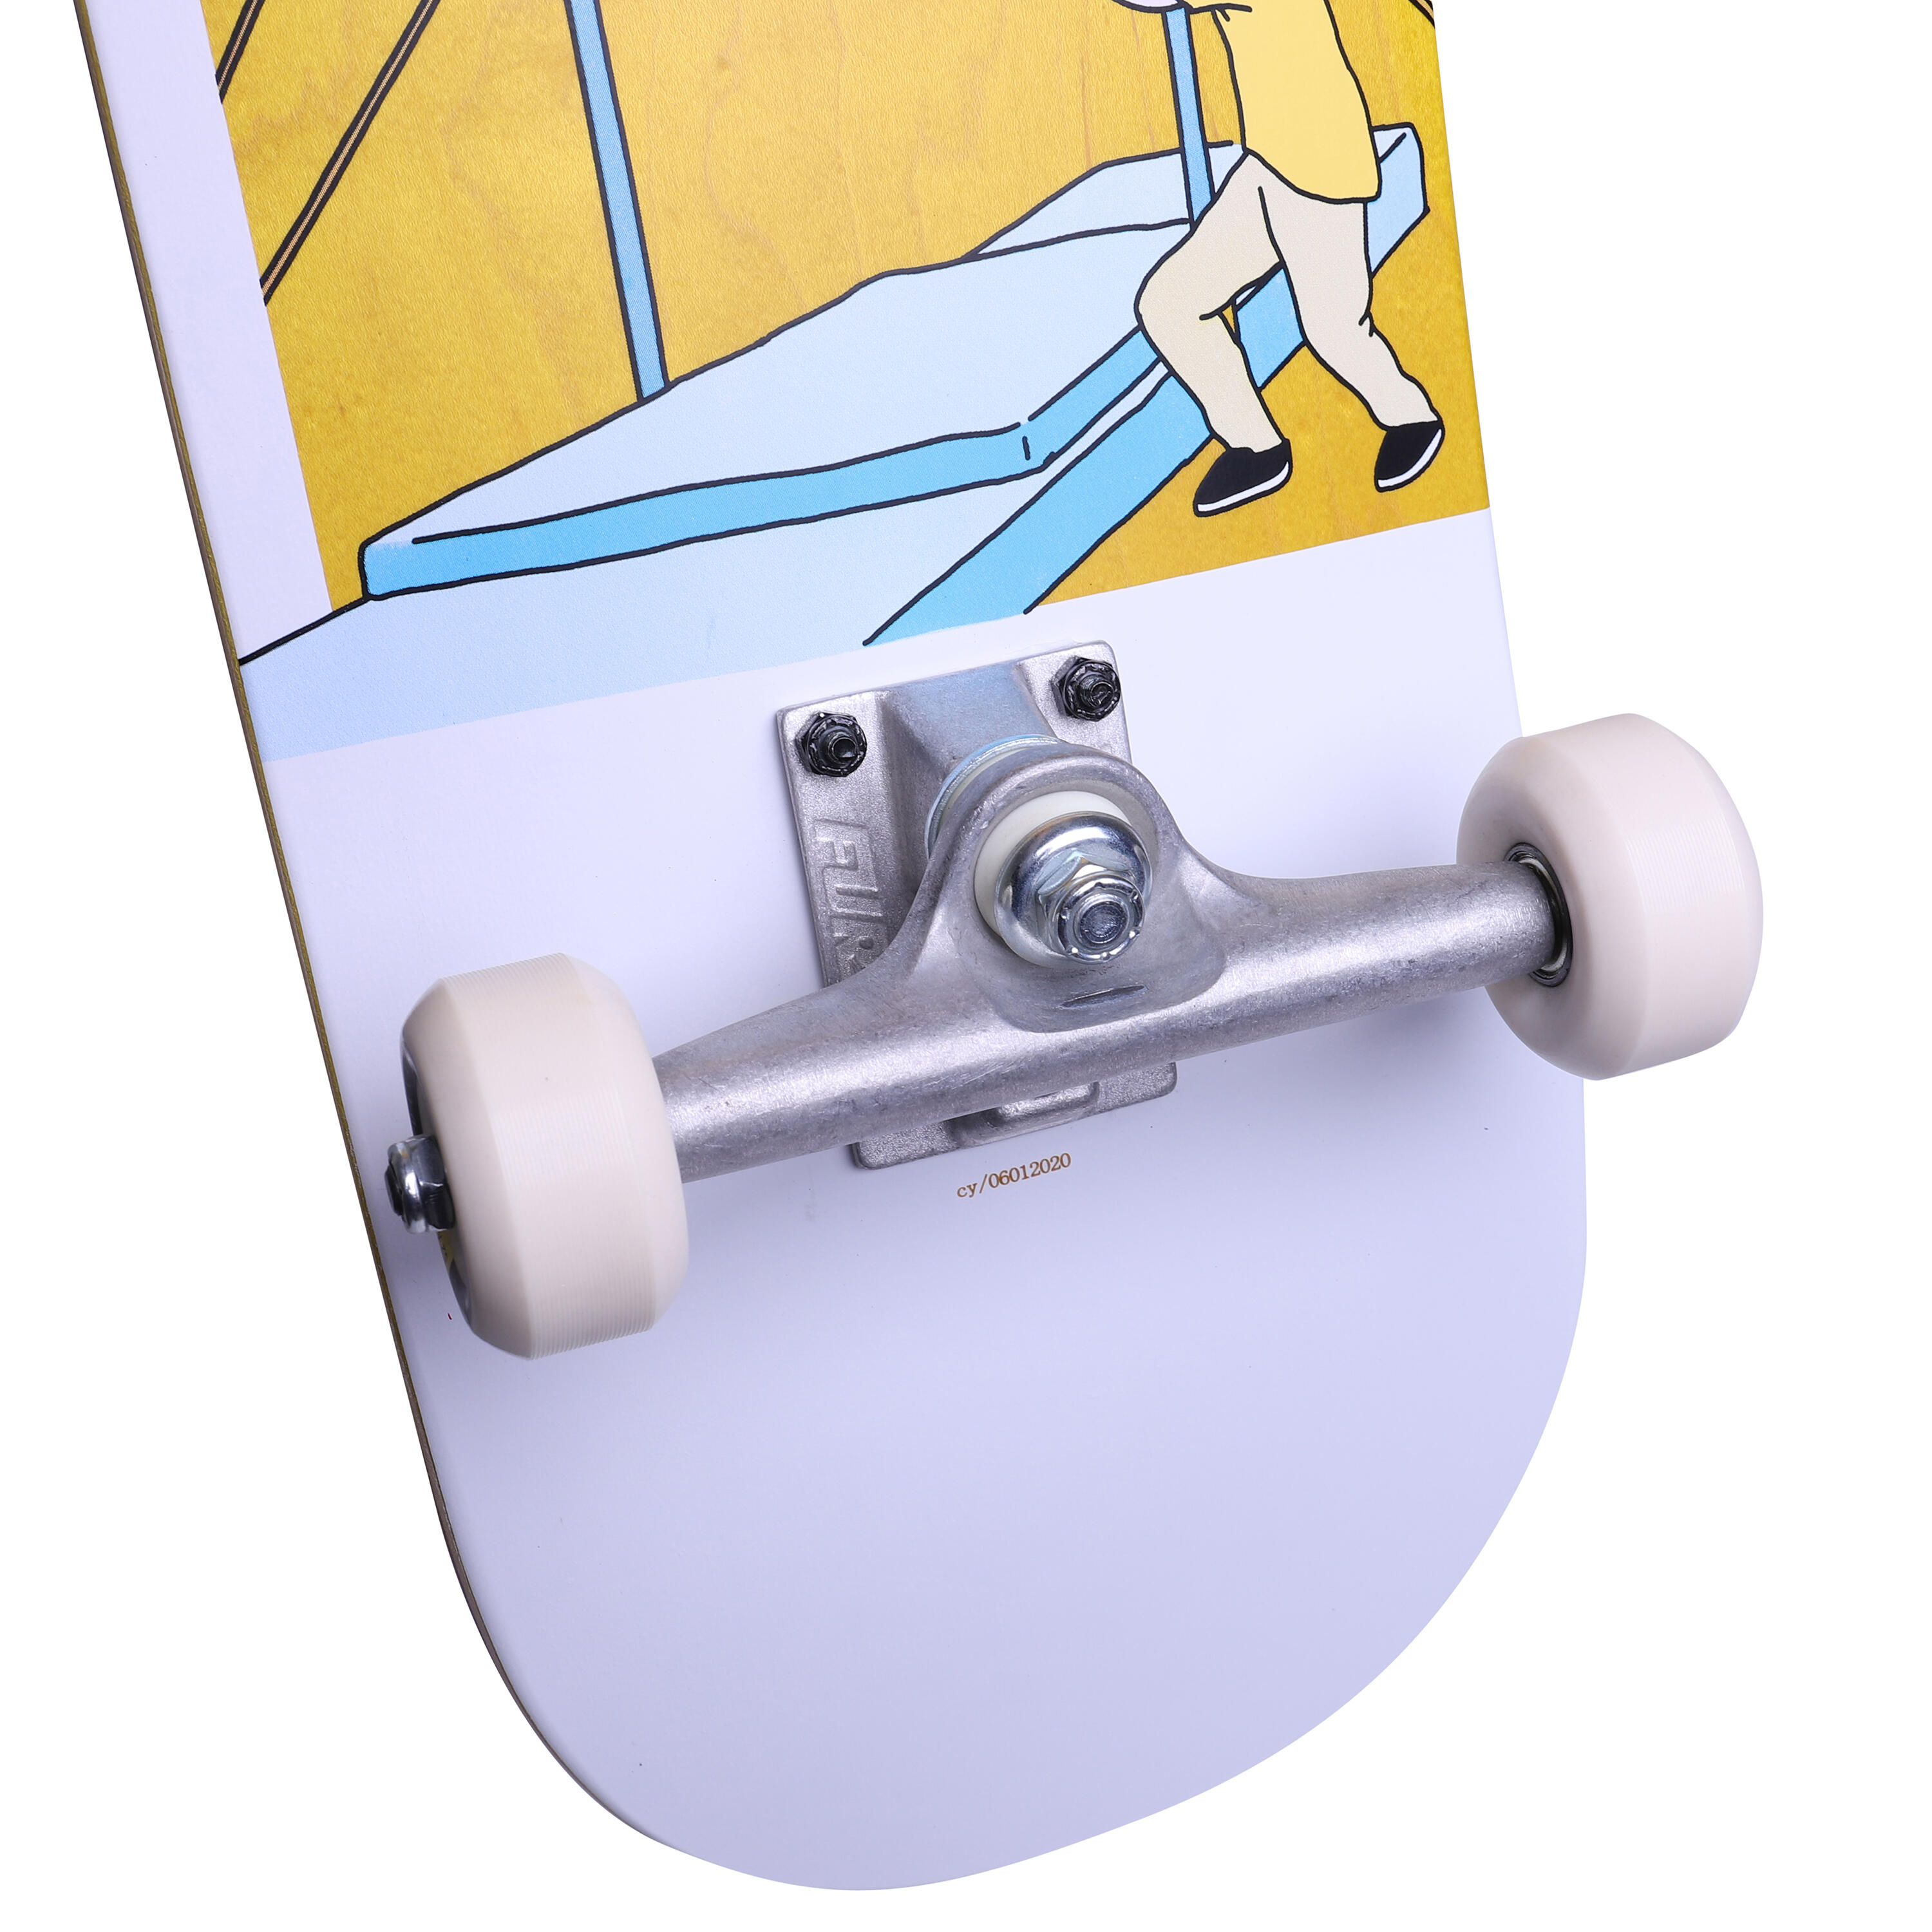 8" Skateboard Complete 500 - Bruce 4/10